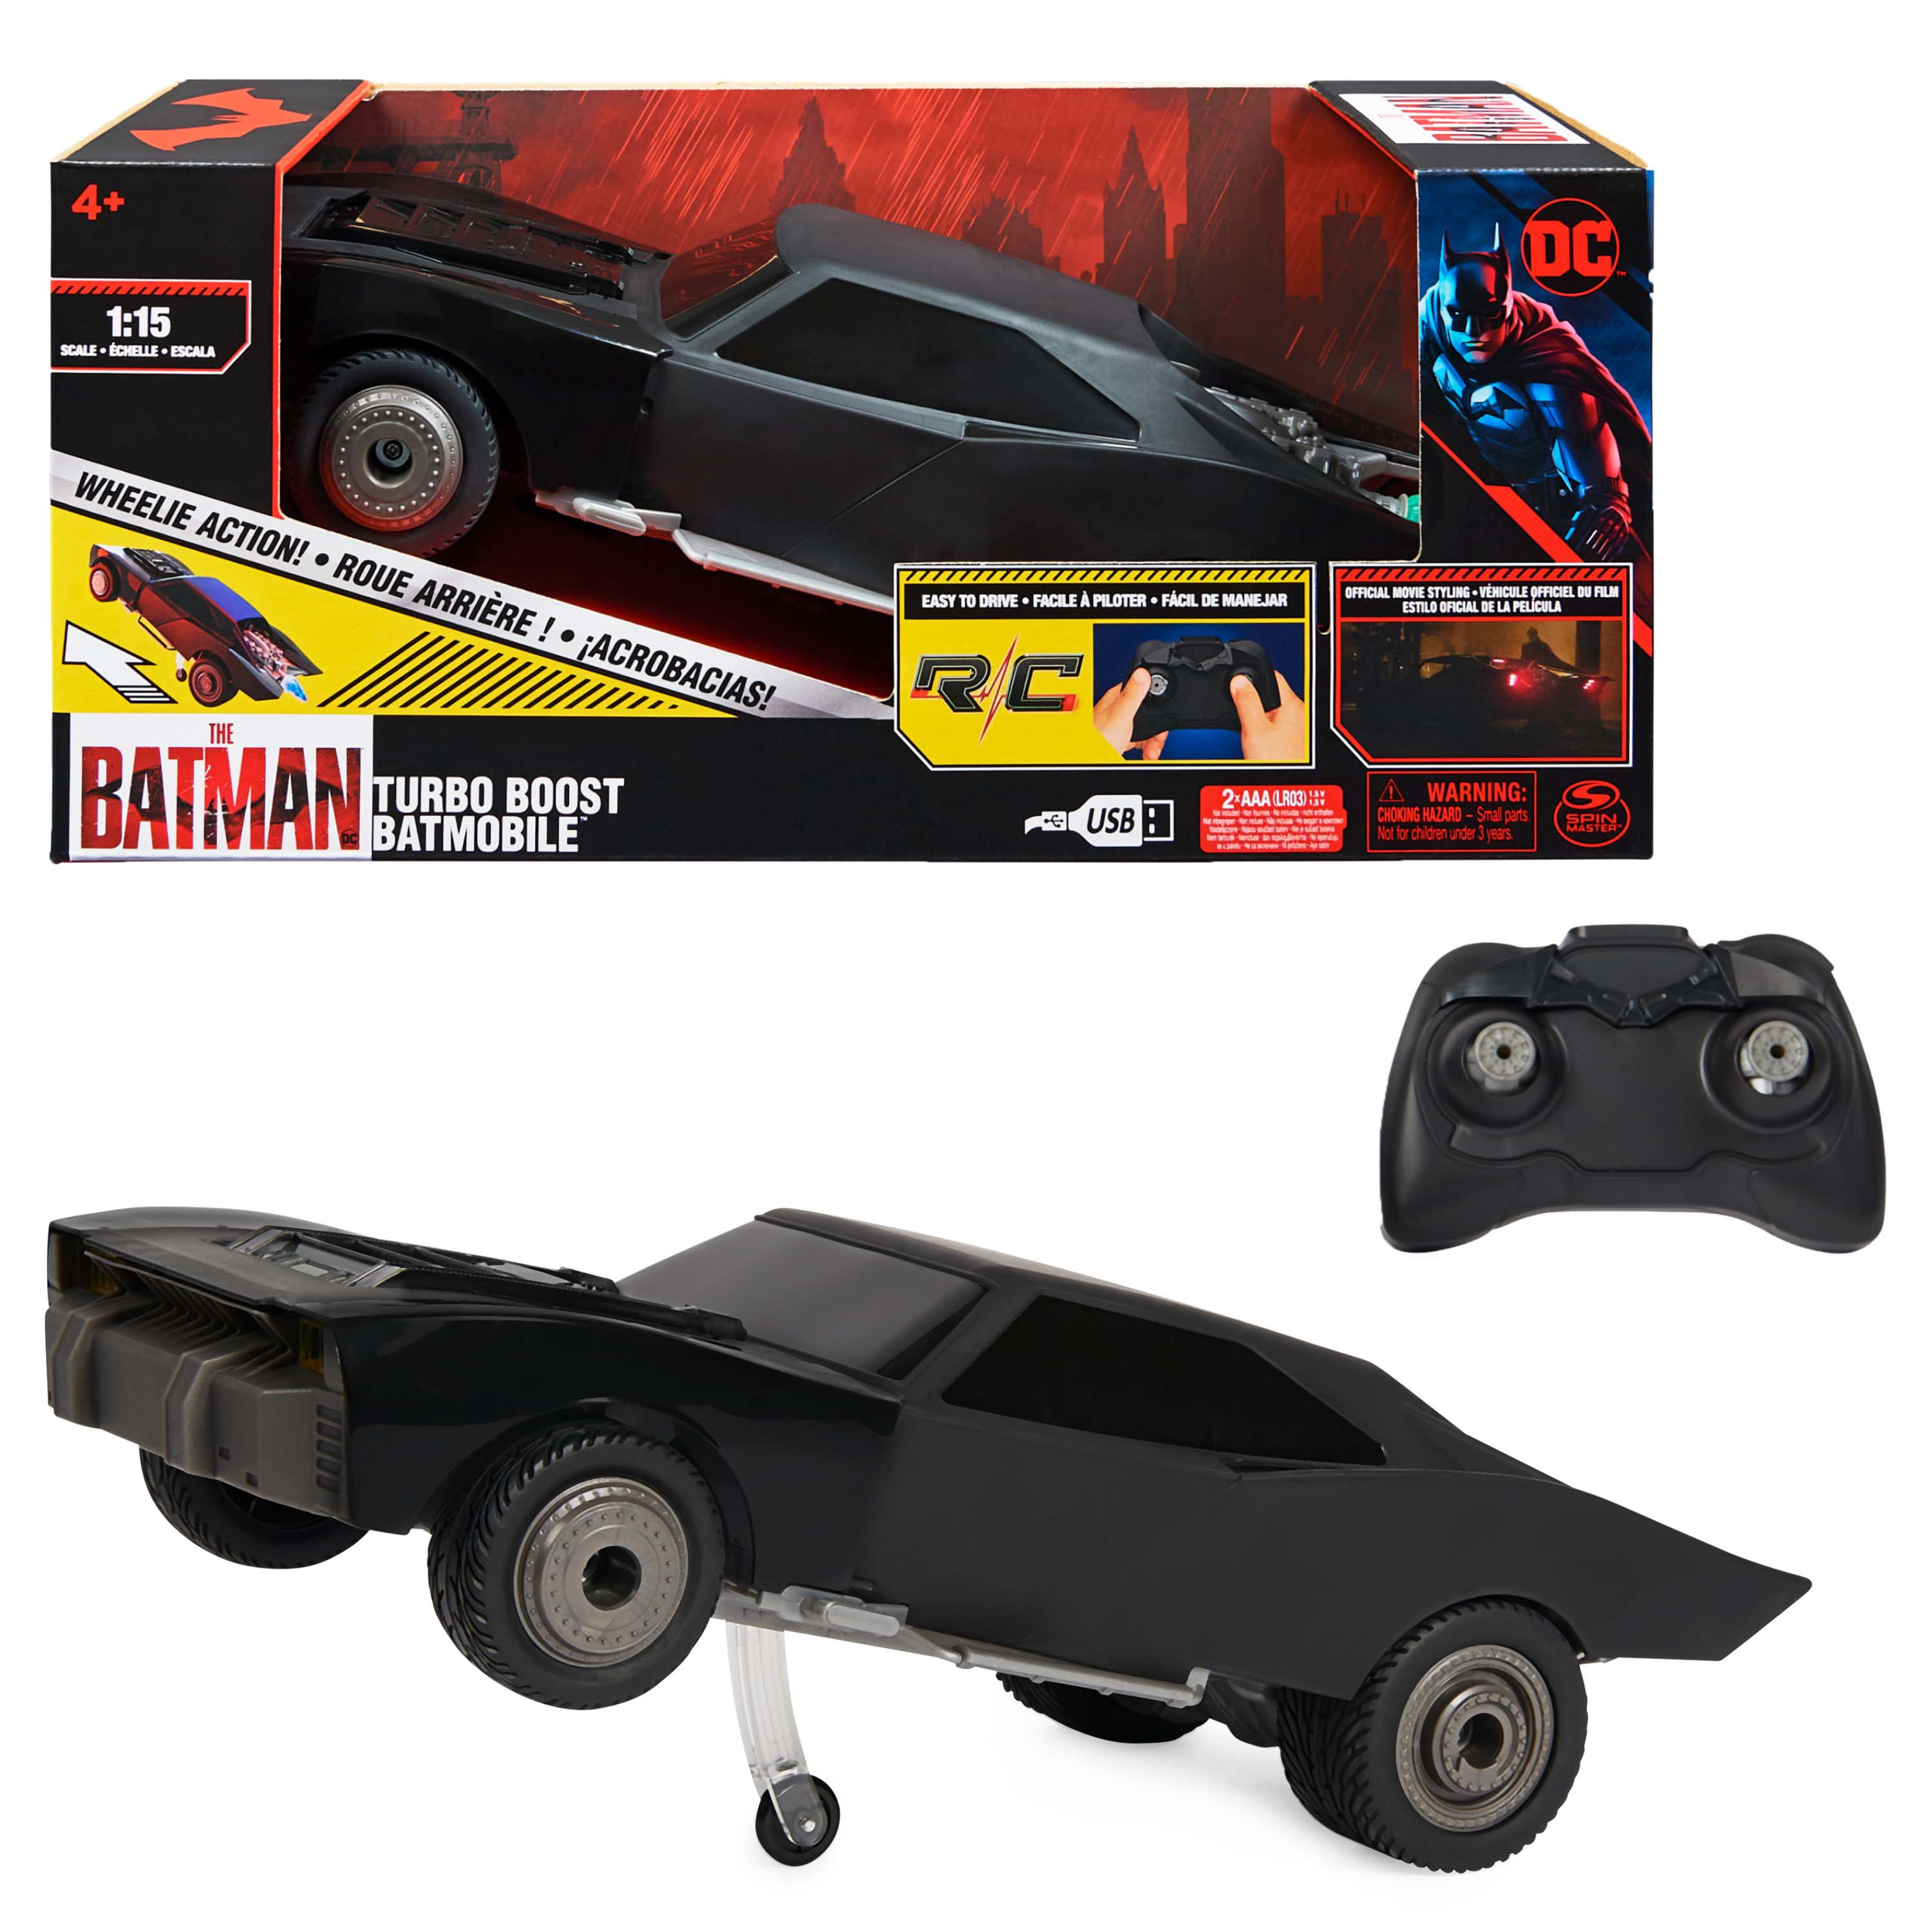 Spin Master DC Comics Batman - offici&#235;le The Batman film collectie - Turbo Boost Batmobile op afstand bestuurbare auto